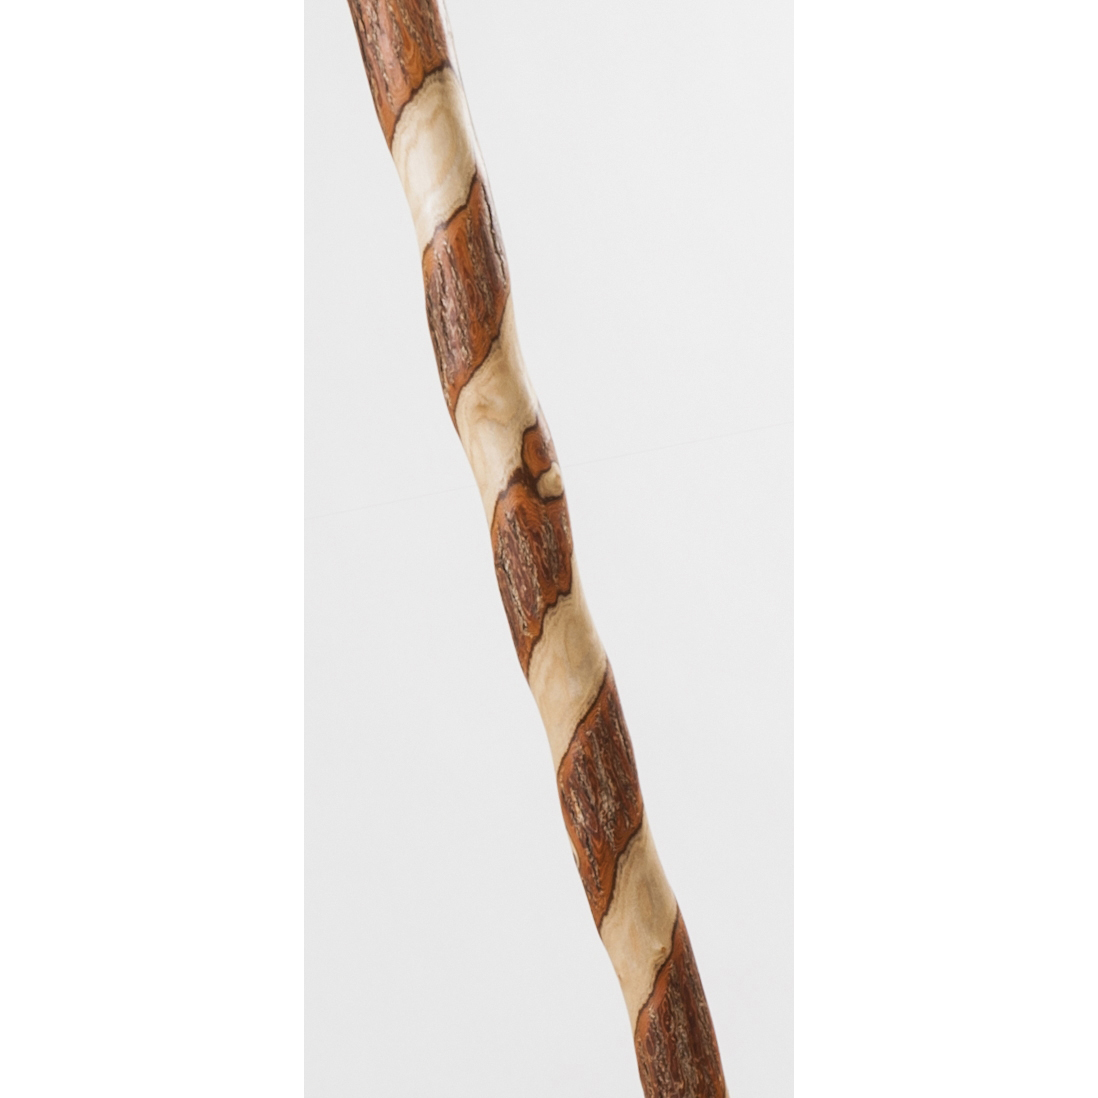 Brazos 602-3000-1317 Free Form Twisted Walking Stick, 48 in H Cane, Standard Handle, Wood Handle, Sassafras - 3